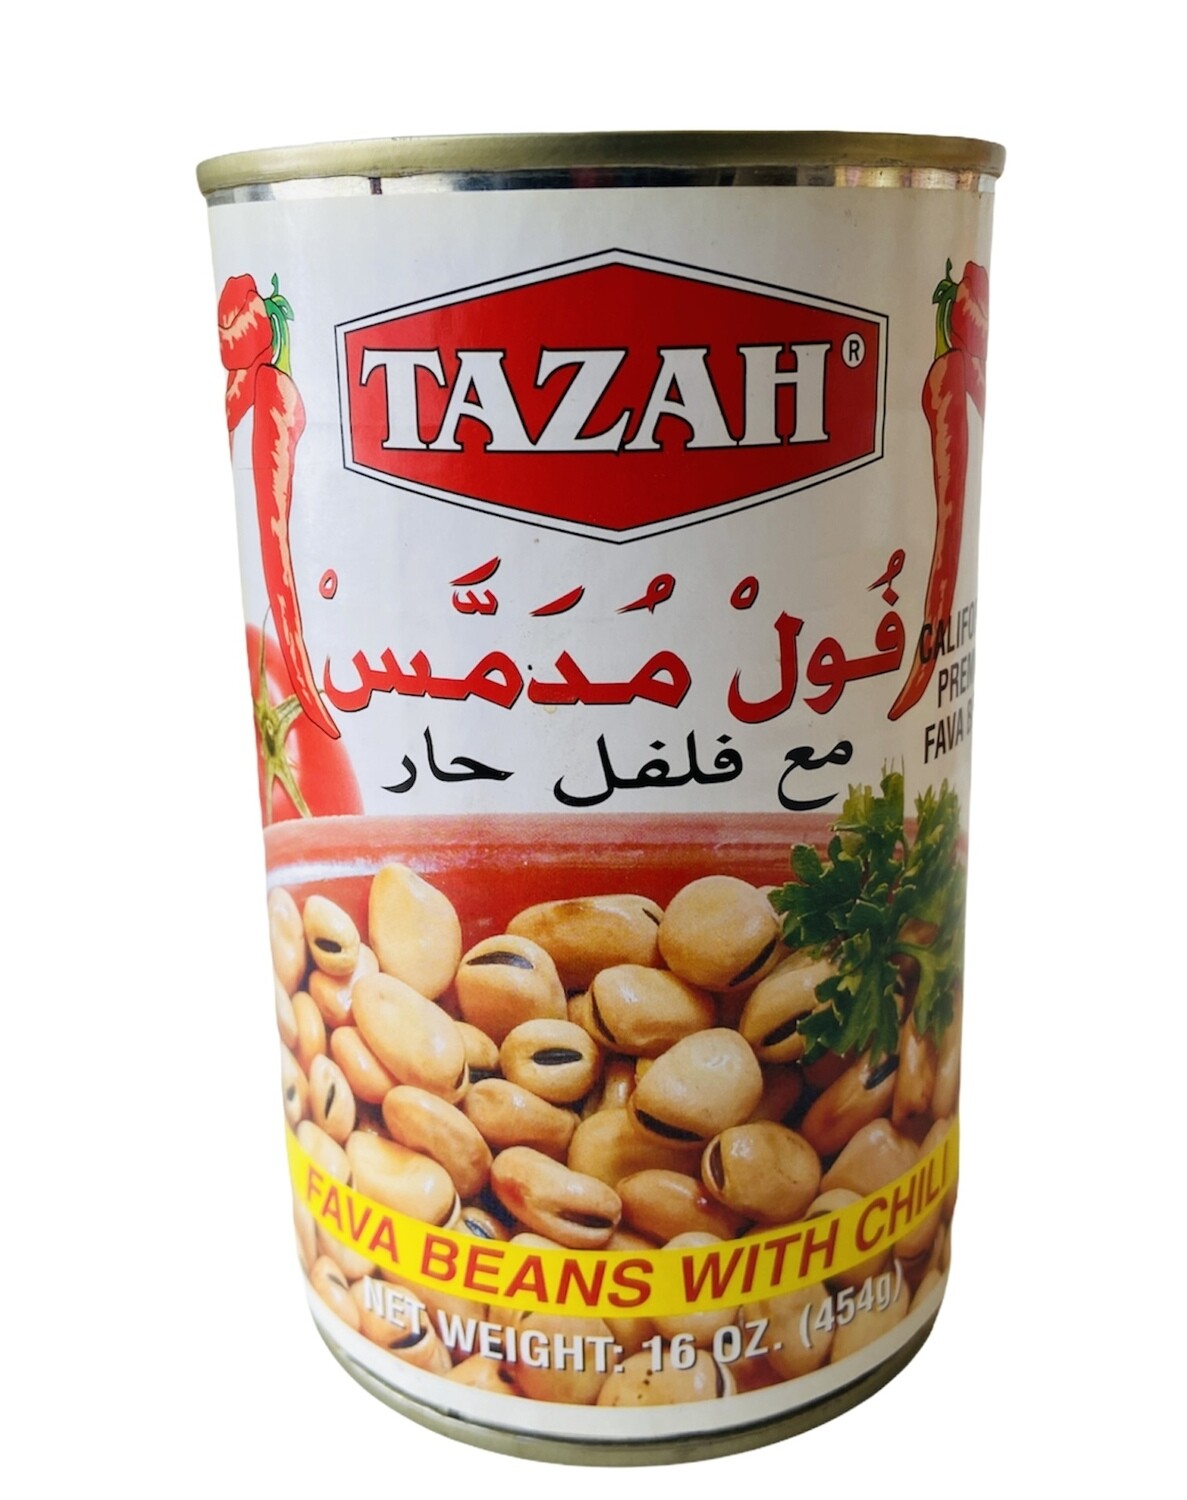 Tazah Fava Beans With Chili 24x16oz